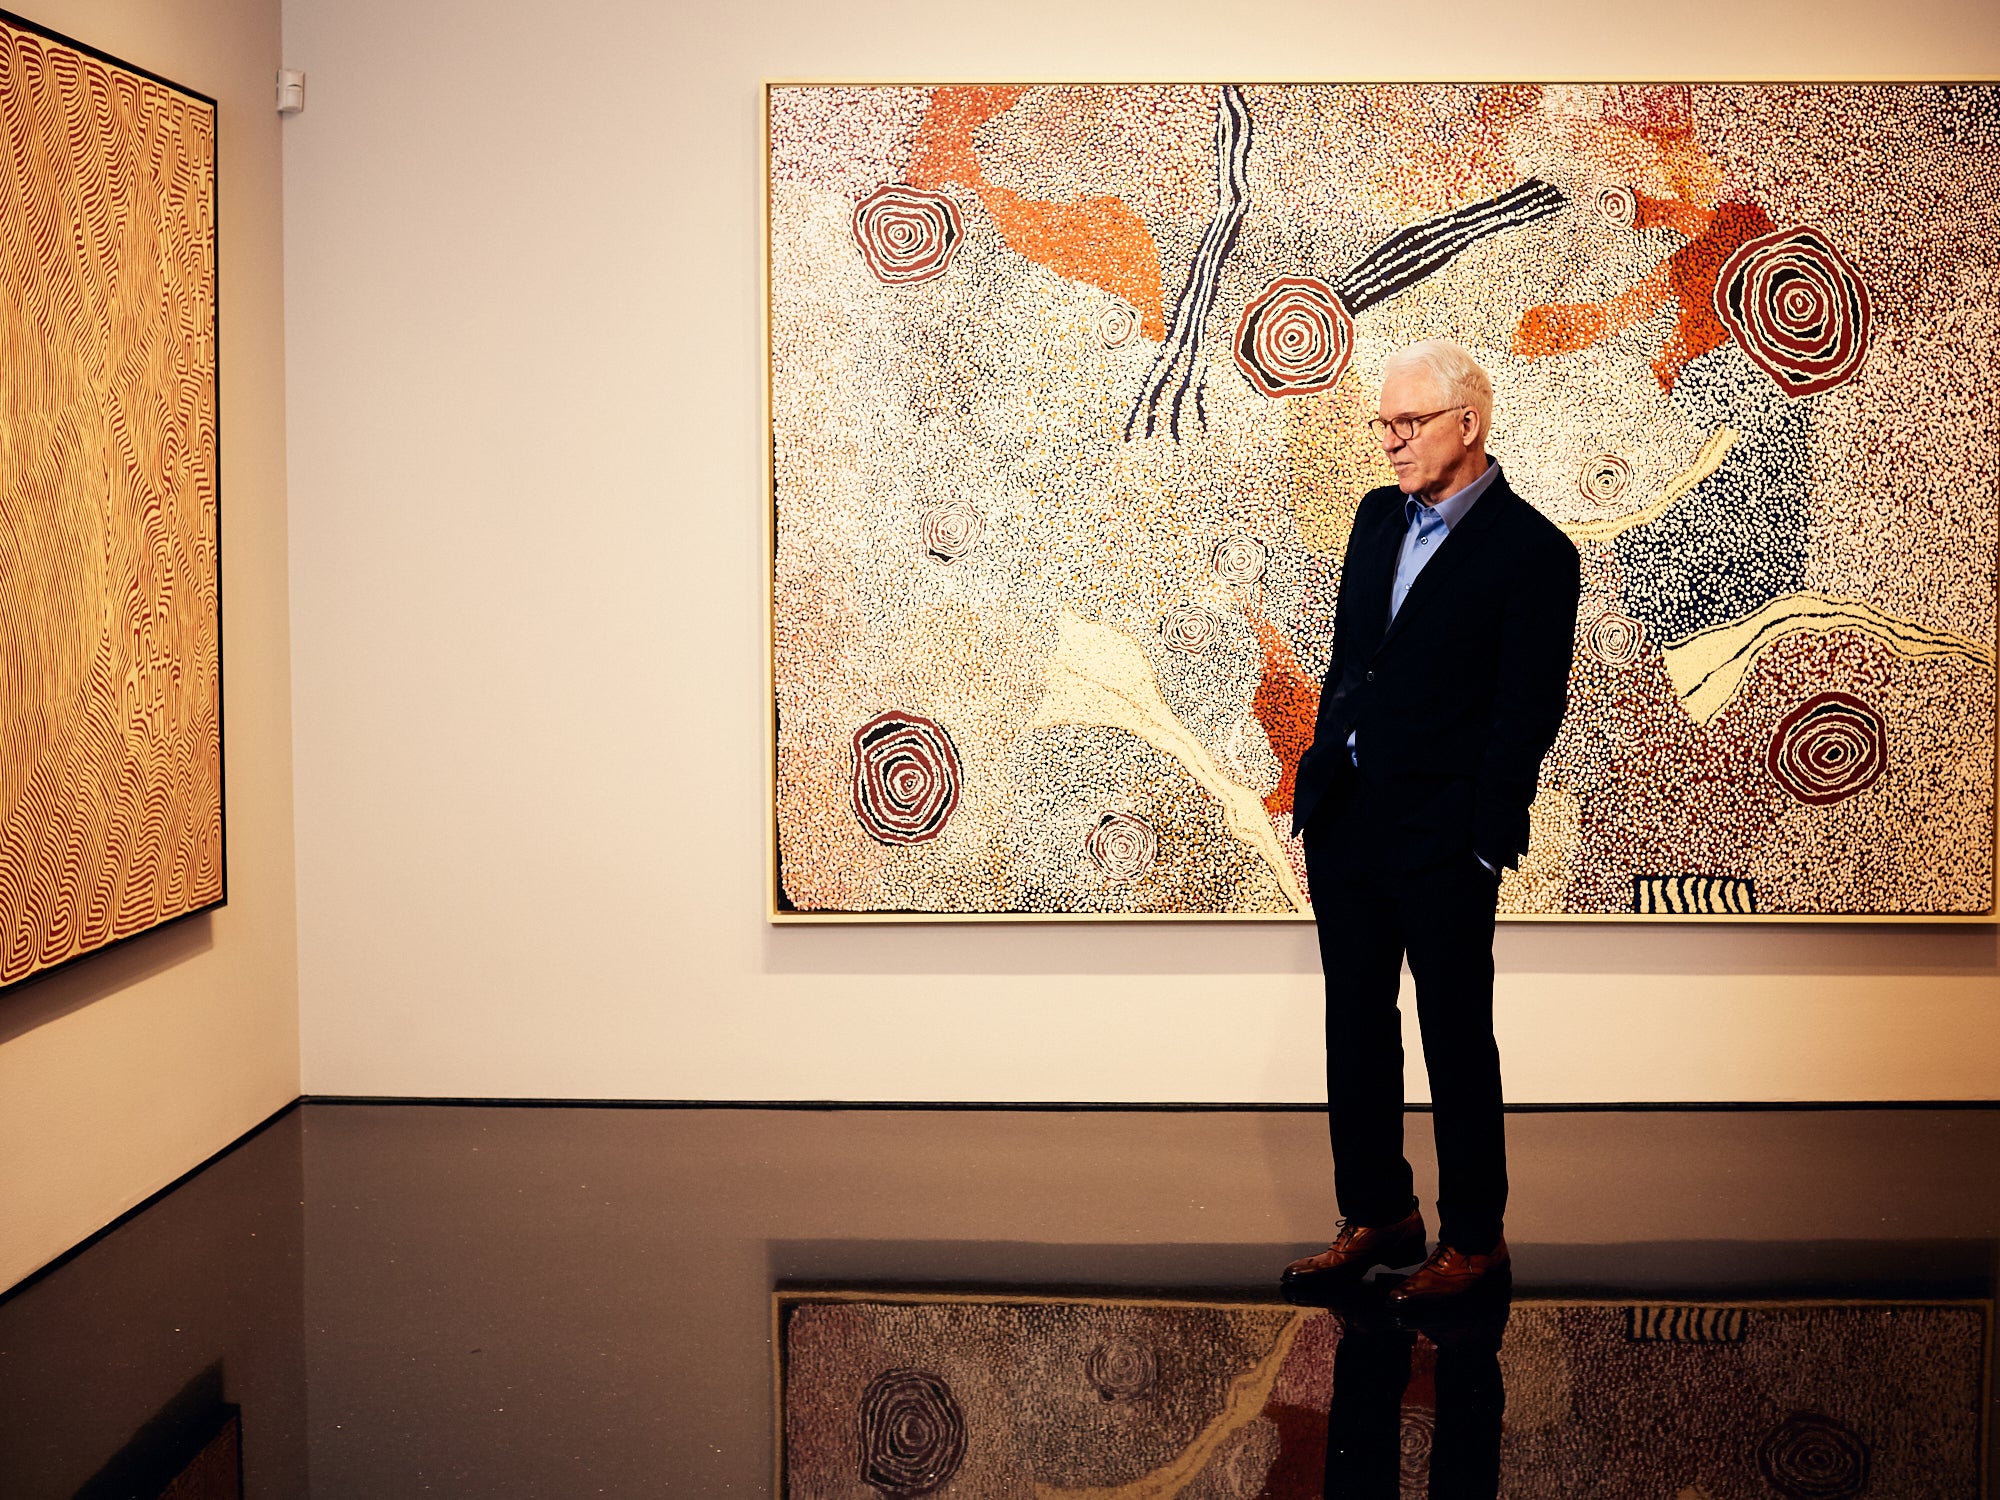 An avid art collector, Martin has bought more than two dozen Aboriginal paintings